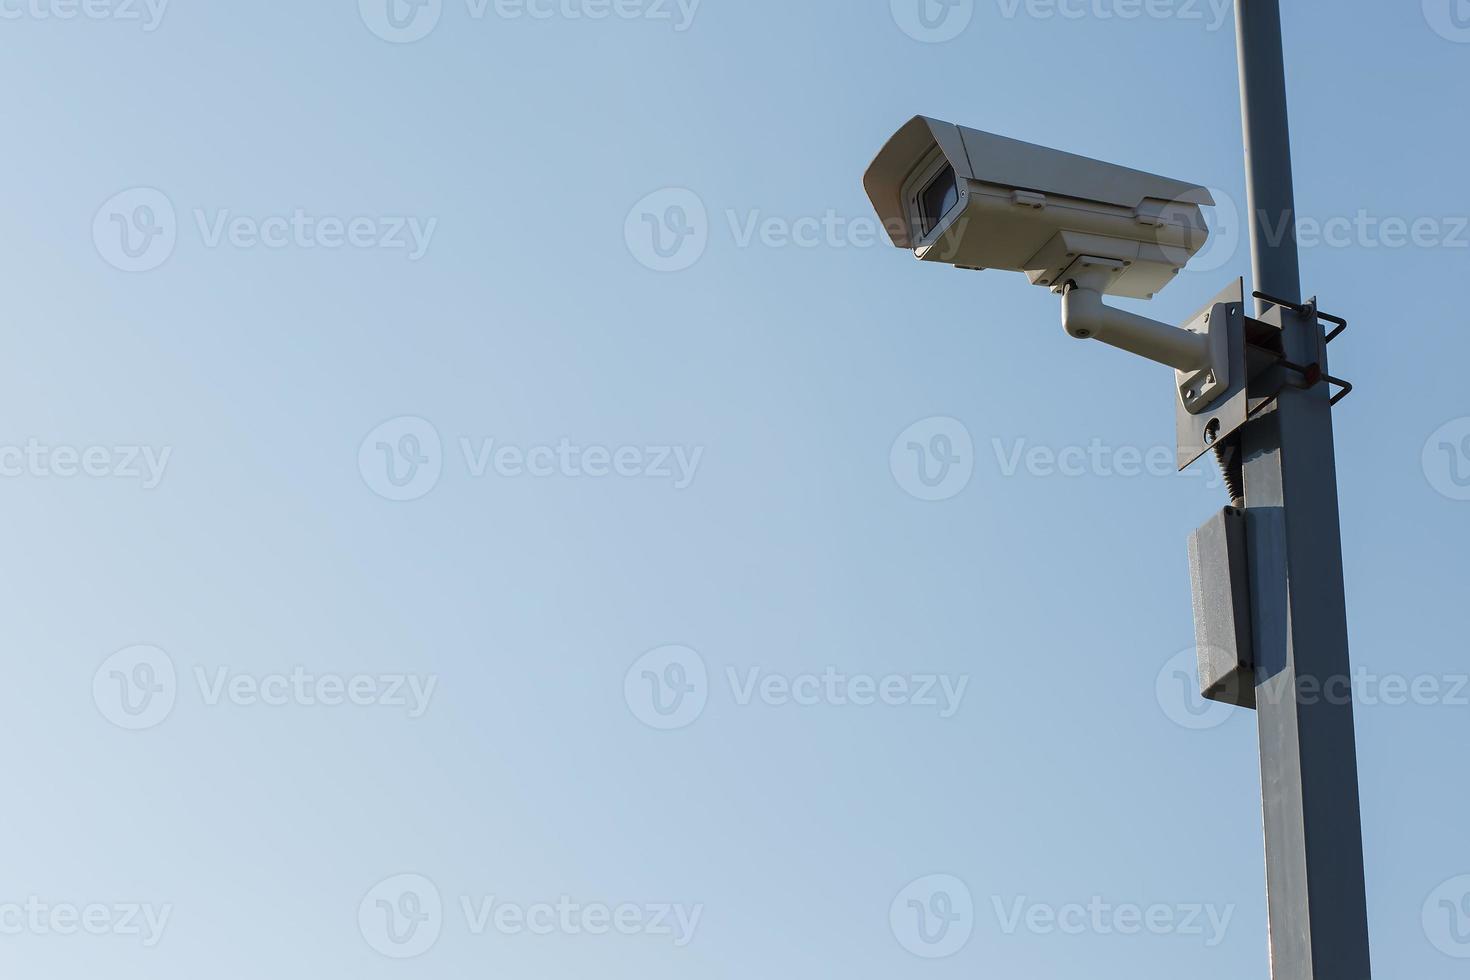 säkerhet kamera på blå himmel bakgrund. säkerhet se posta foto